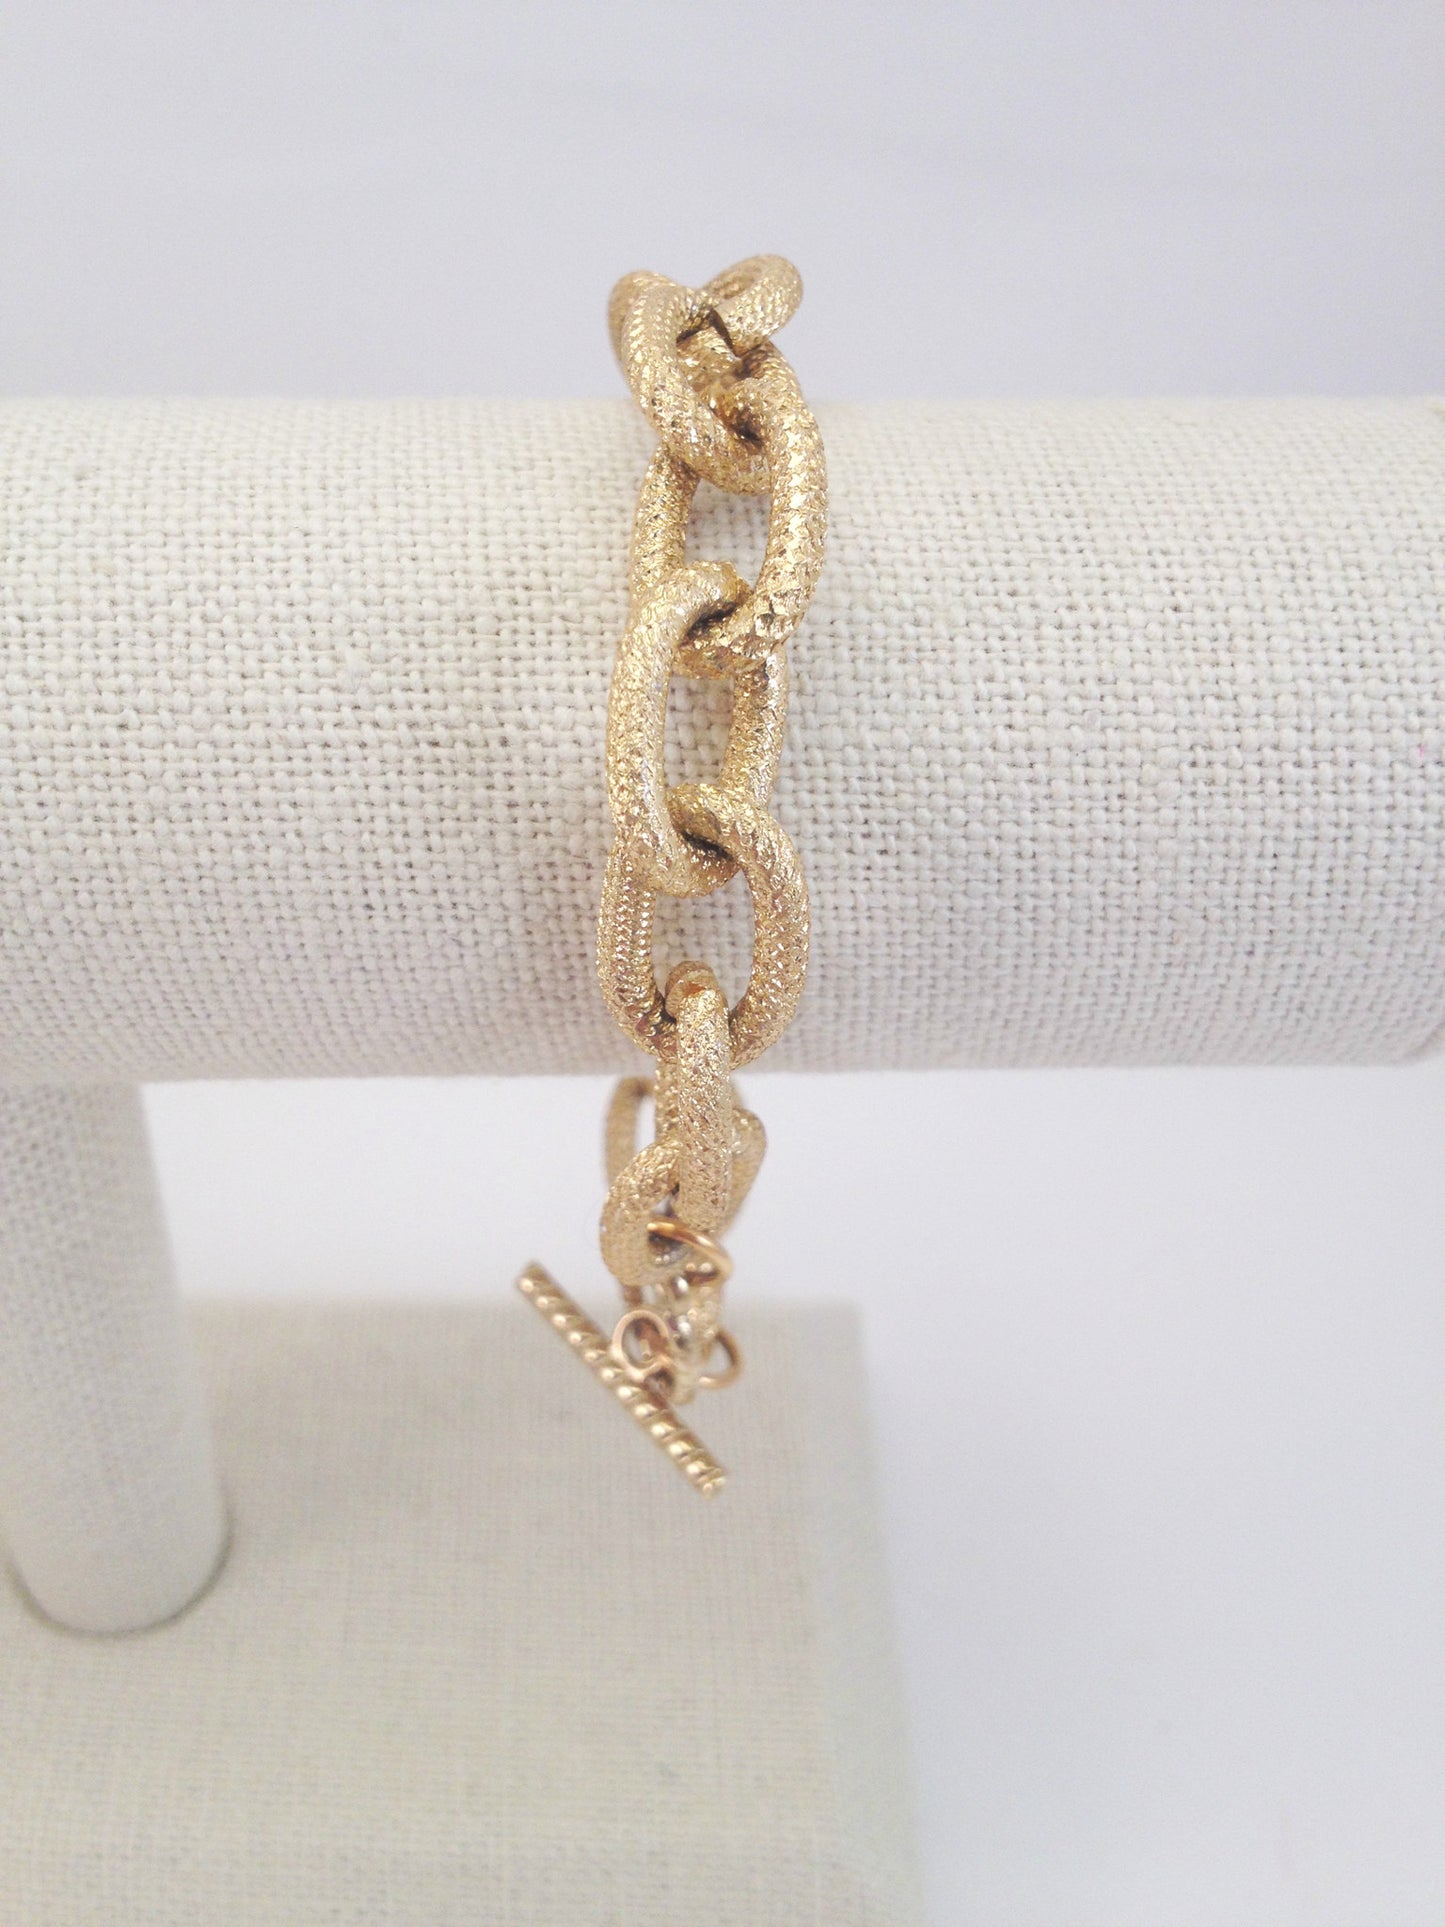 chain loop bracelet- textured